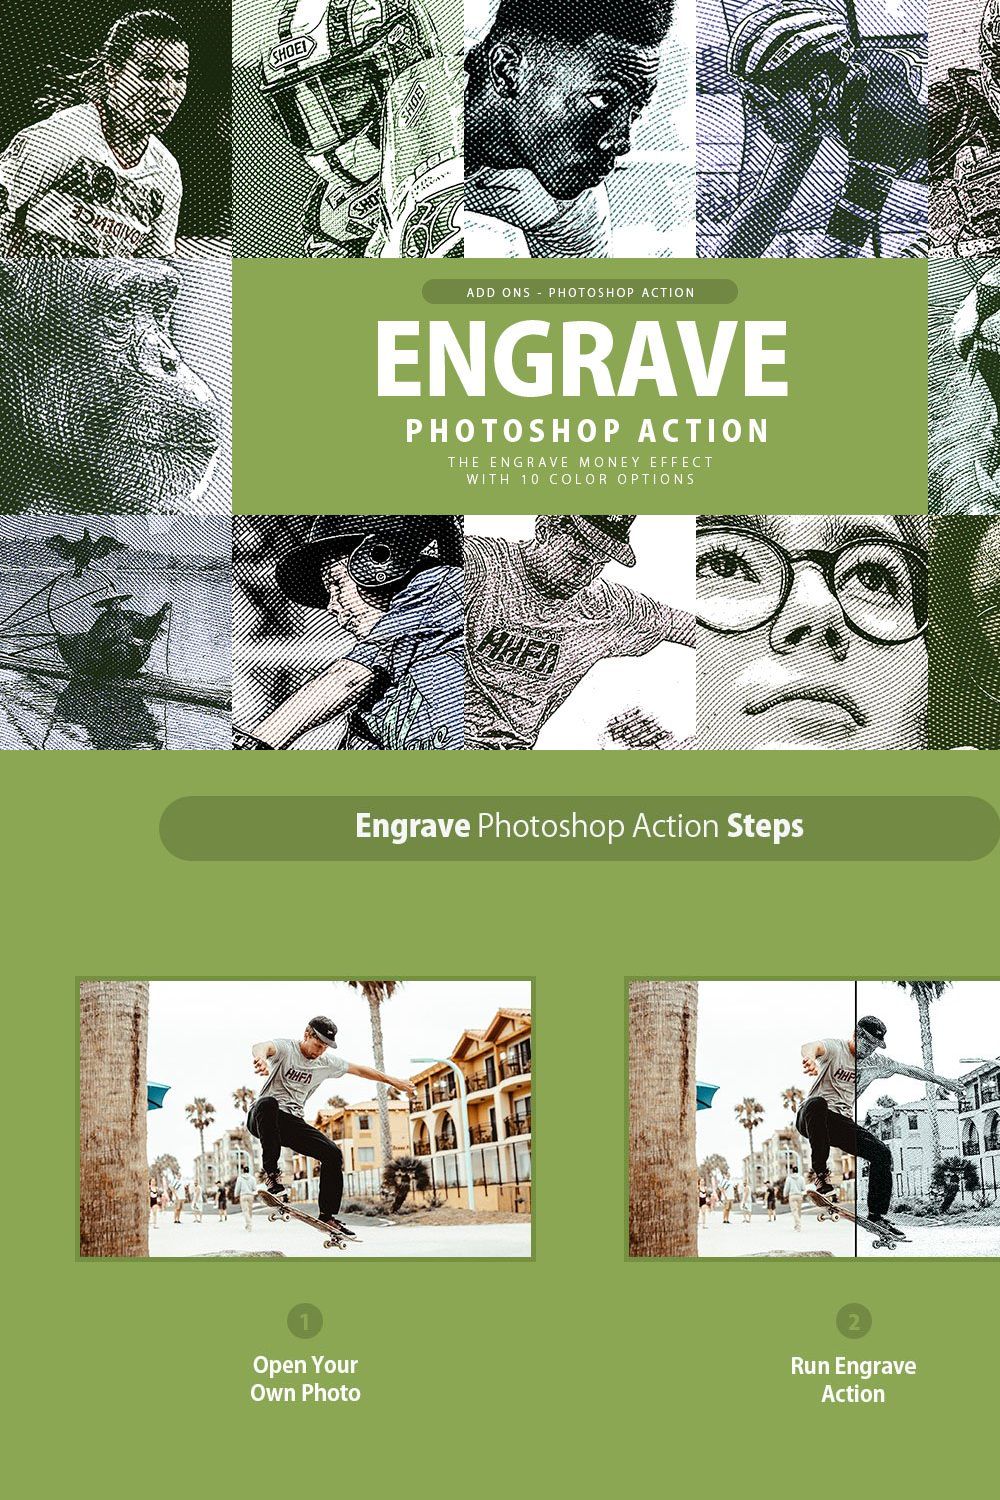 Engrave Photoshop Action pinterest preview image.